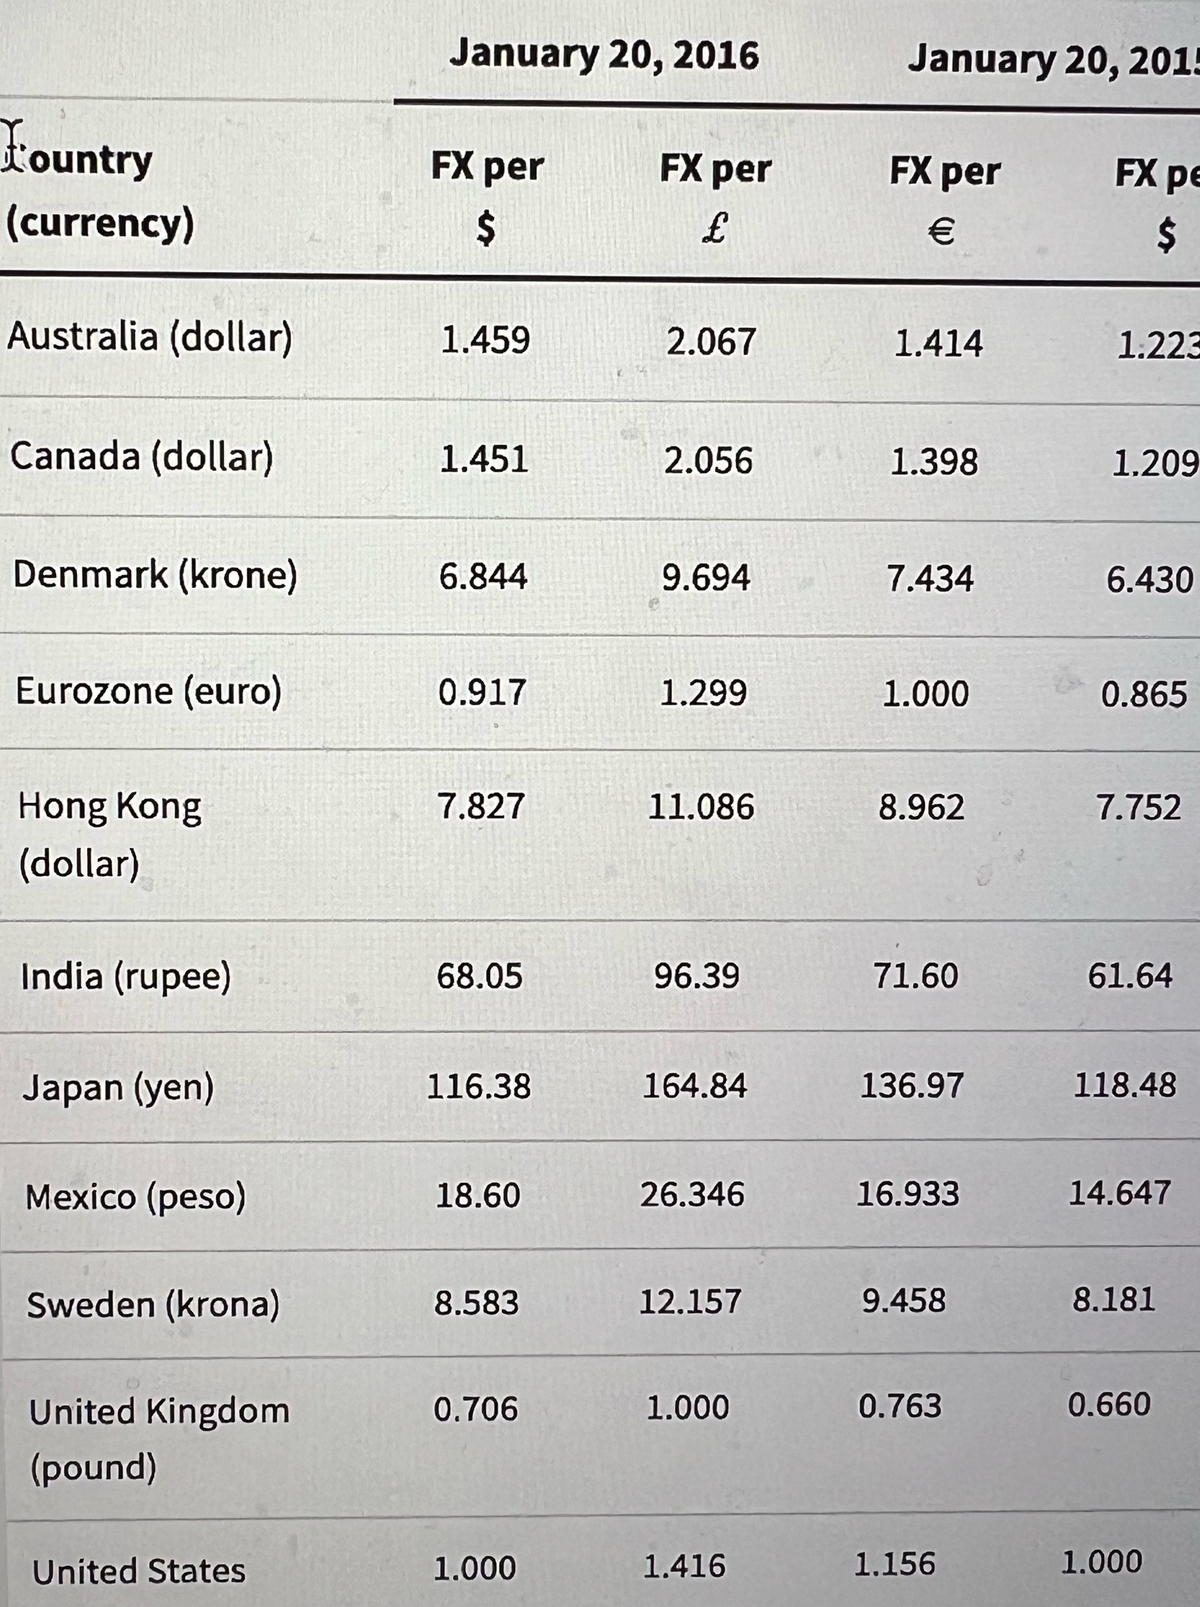 Fountry
(currency)
Australia (dollar)
Canada (dollar)
Denmark (krone)
Eurozone (euro)
Hong Kong
(dollar)
India (rupee)
Japan (yen)
Mexico (peso)
Sweden (krona)
United Kingdom
(pound)
United States
January 20, 2016
FX per
$
1.459
1.451
6.844
0.917
7.827
68.05
116.38
18.60
8.583
0.706
1.000
FX per
£
2.067
2.056
9.694
1.299
11.086
96.39
164.84
26.346
12.157
1.000
1.416
January 20, 2015
FX per
€
1.414
1.398
7.434
1.000
8.962
71.60
136.97
16.933
9.458
0.763
1.156
FX pe
$
1.223
1.209
6.430
0.865
7.752
61.64
118.48
14.647
8.181
0.660
1.000